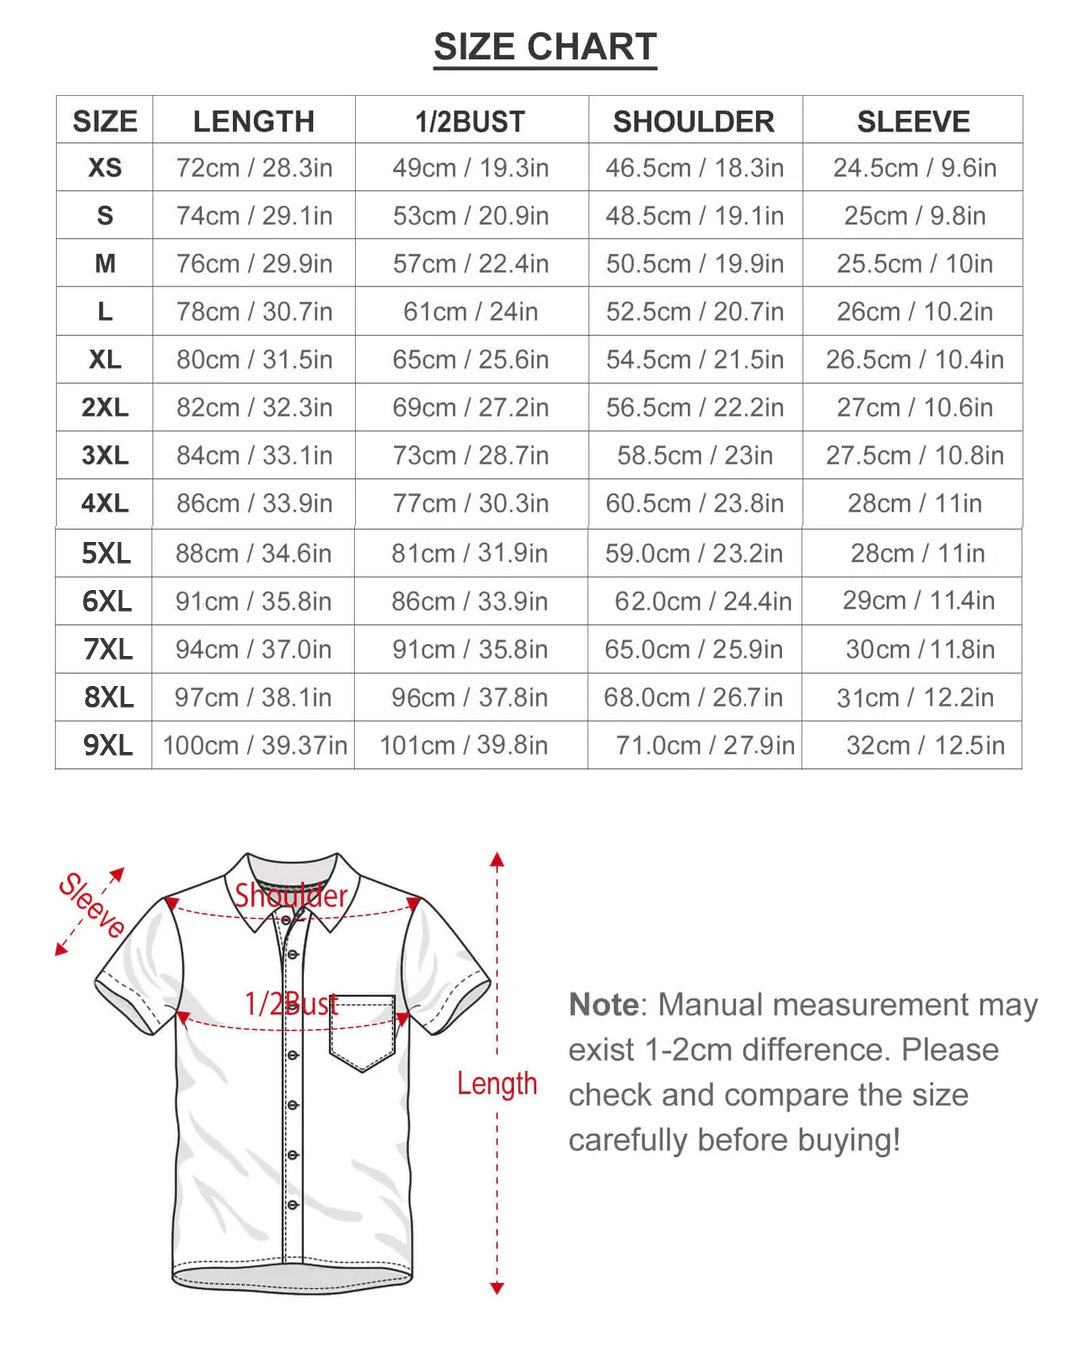 Hero Print Oversized Slub Linen Short Sleeve Shirt 2406000697